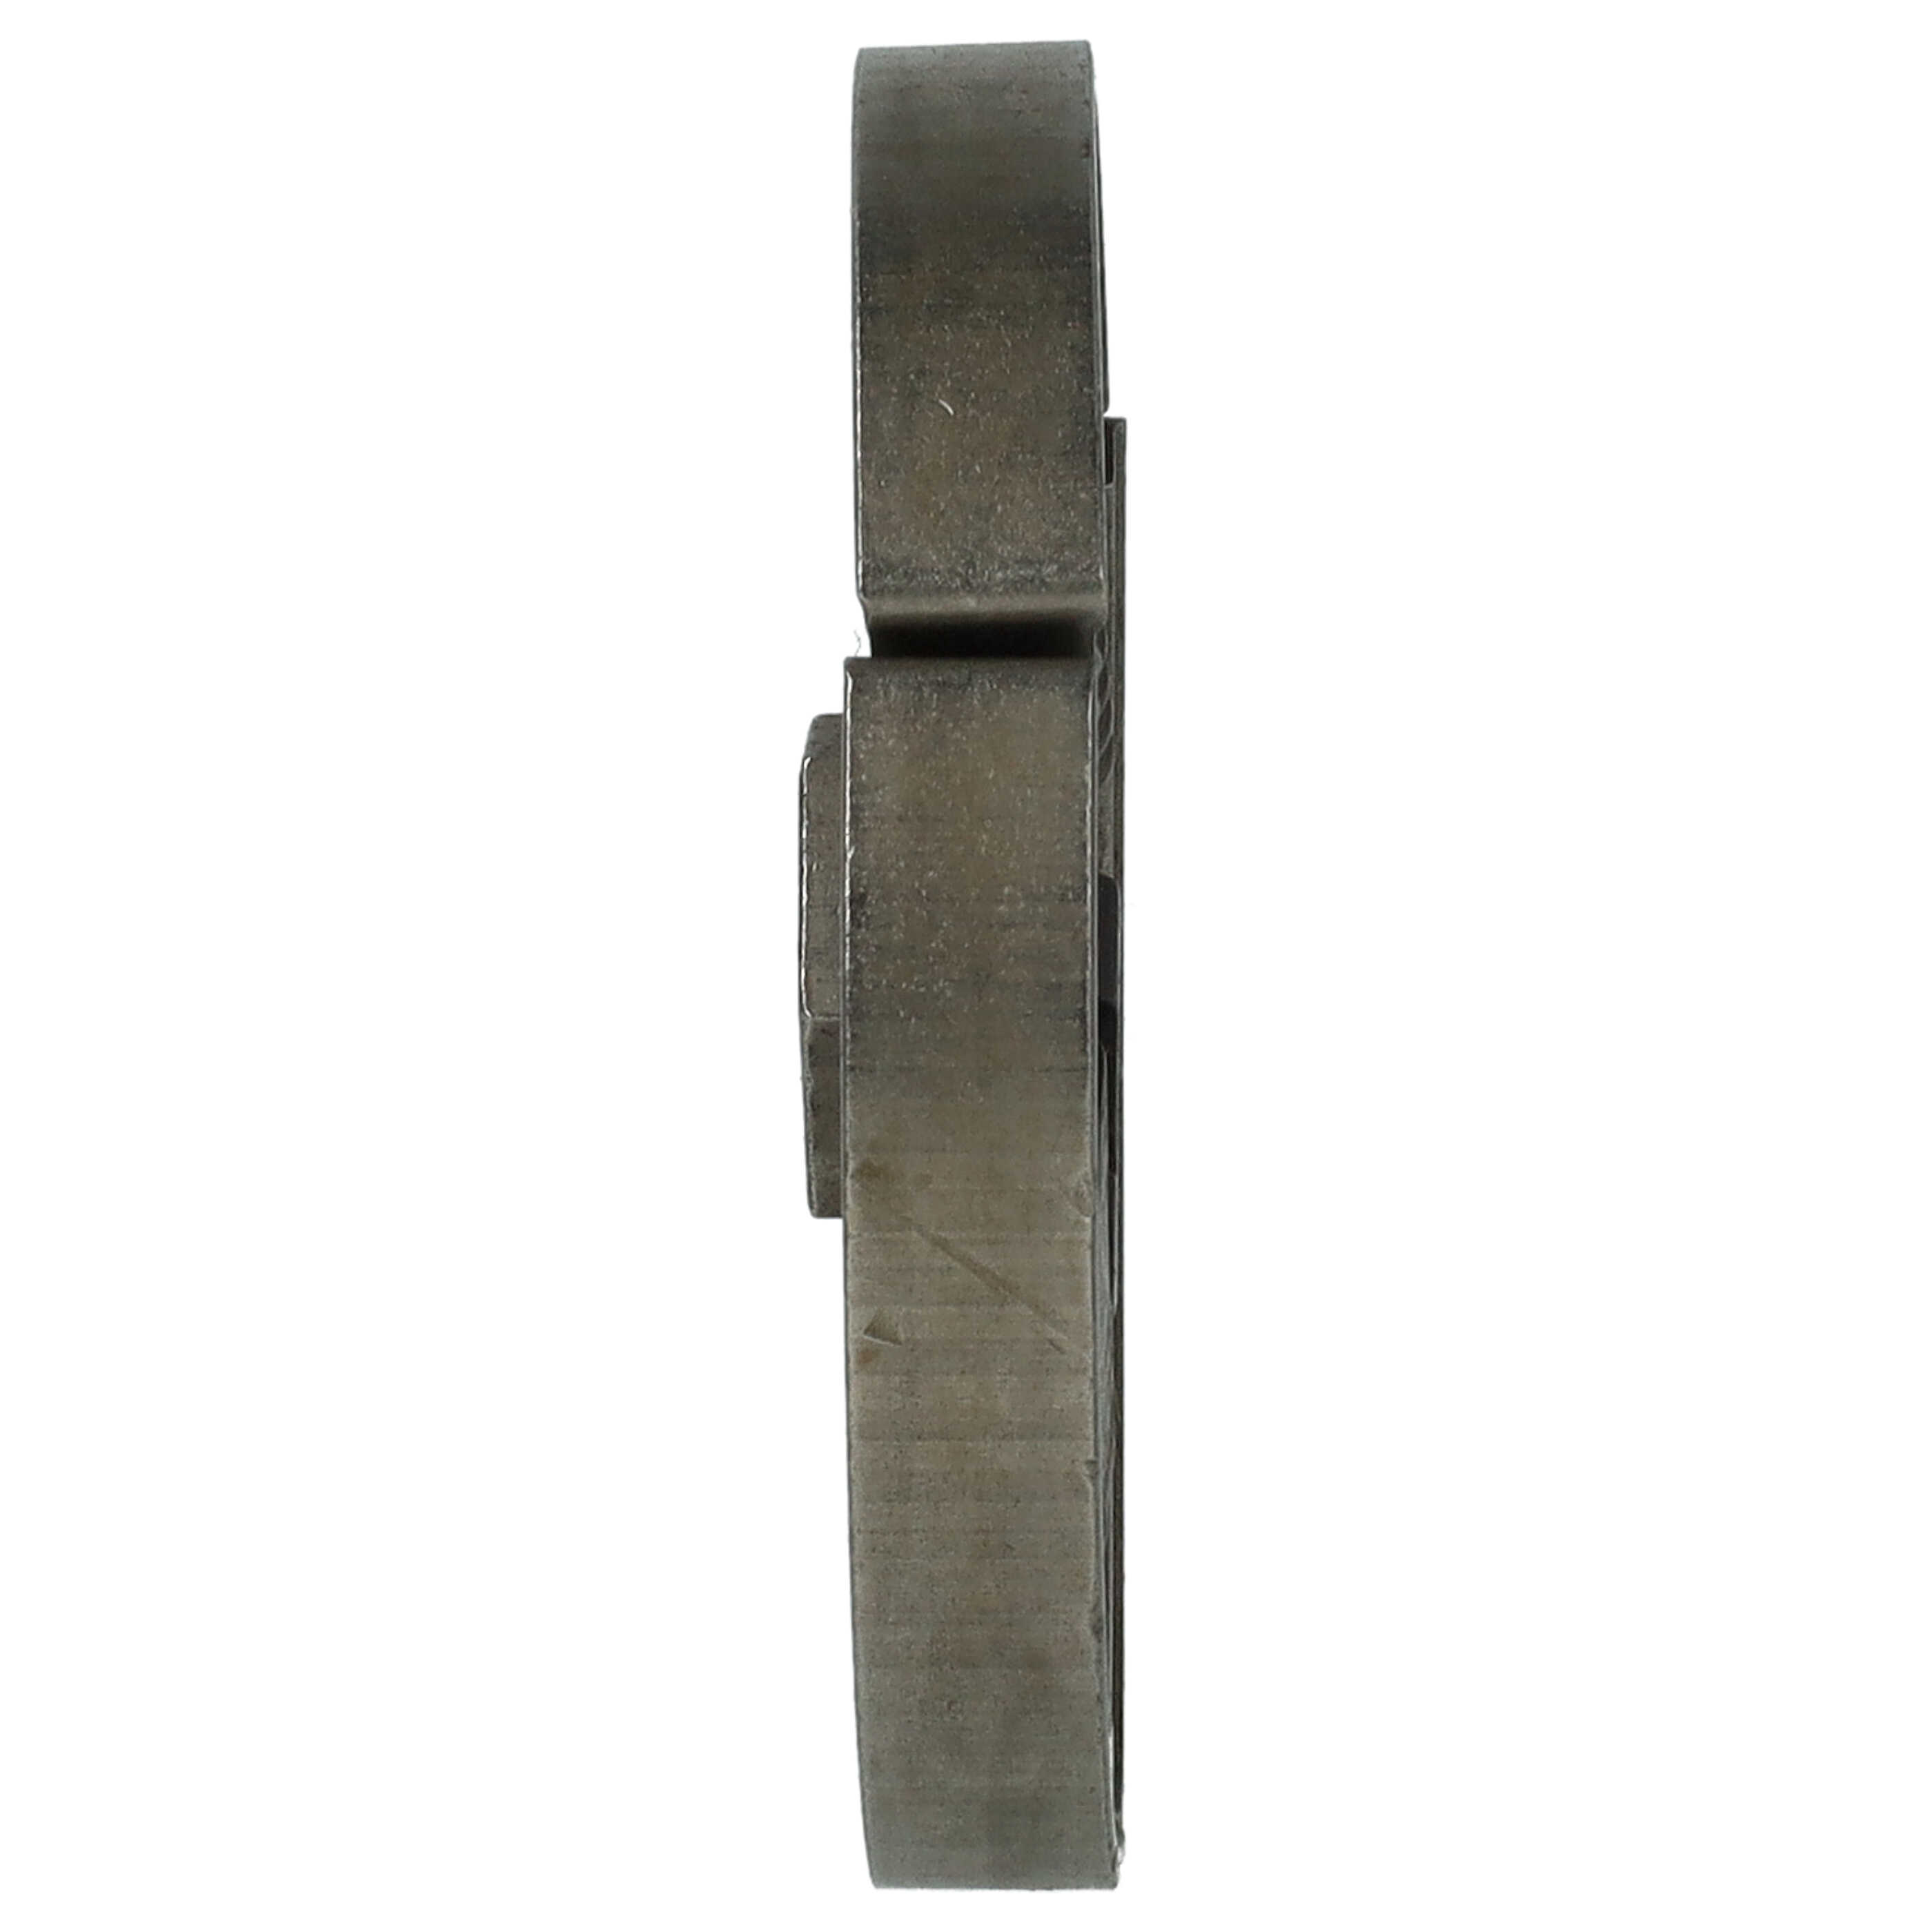 Embrague centrífugo compatible con Stihl TS420 sierras de cadena, etc. - hierro / acero 65Mn, 7,4 cm de diámet